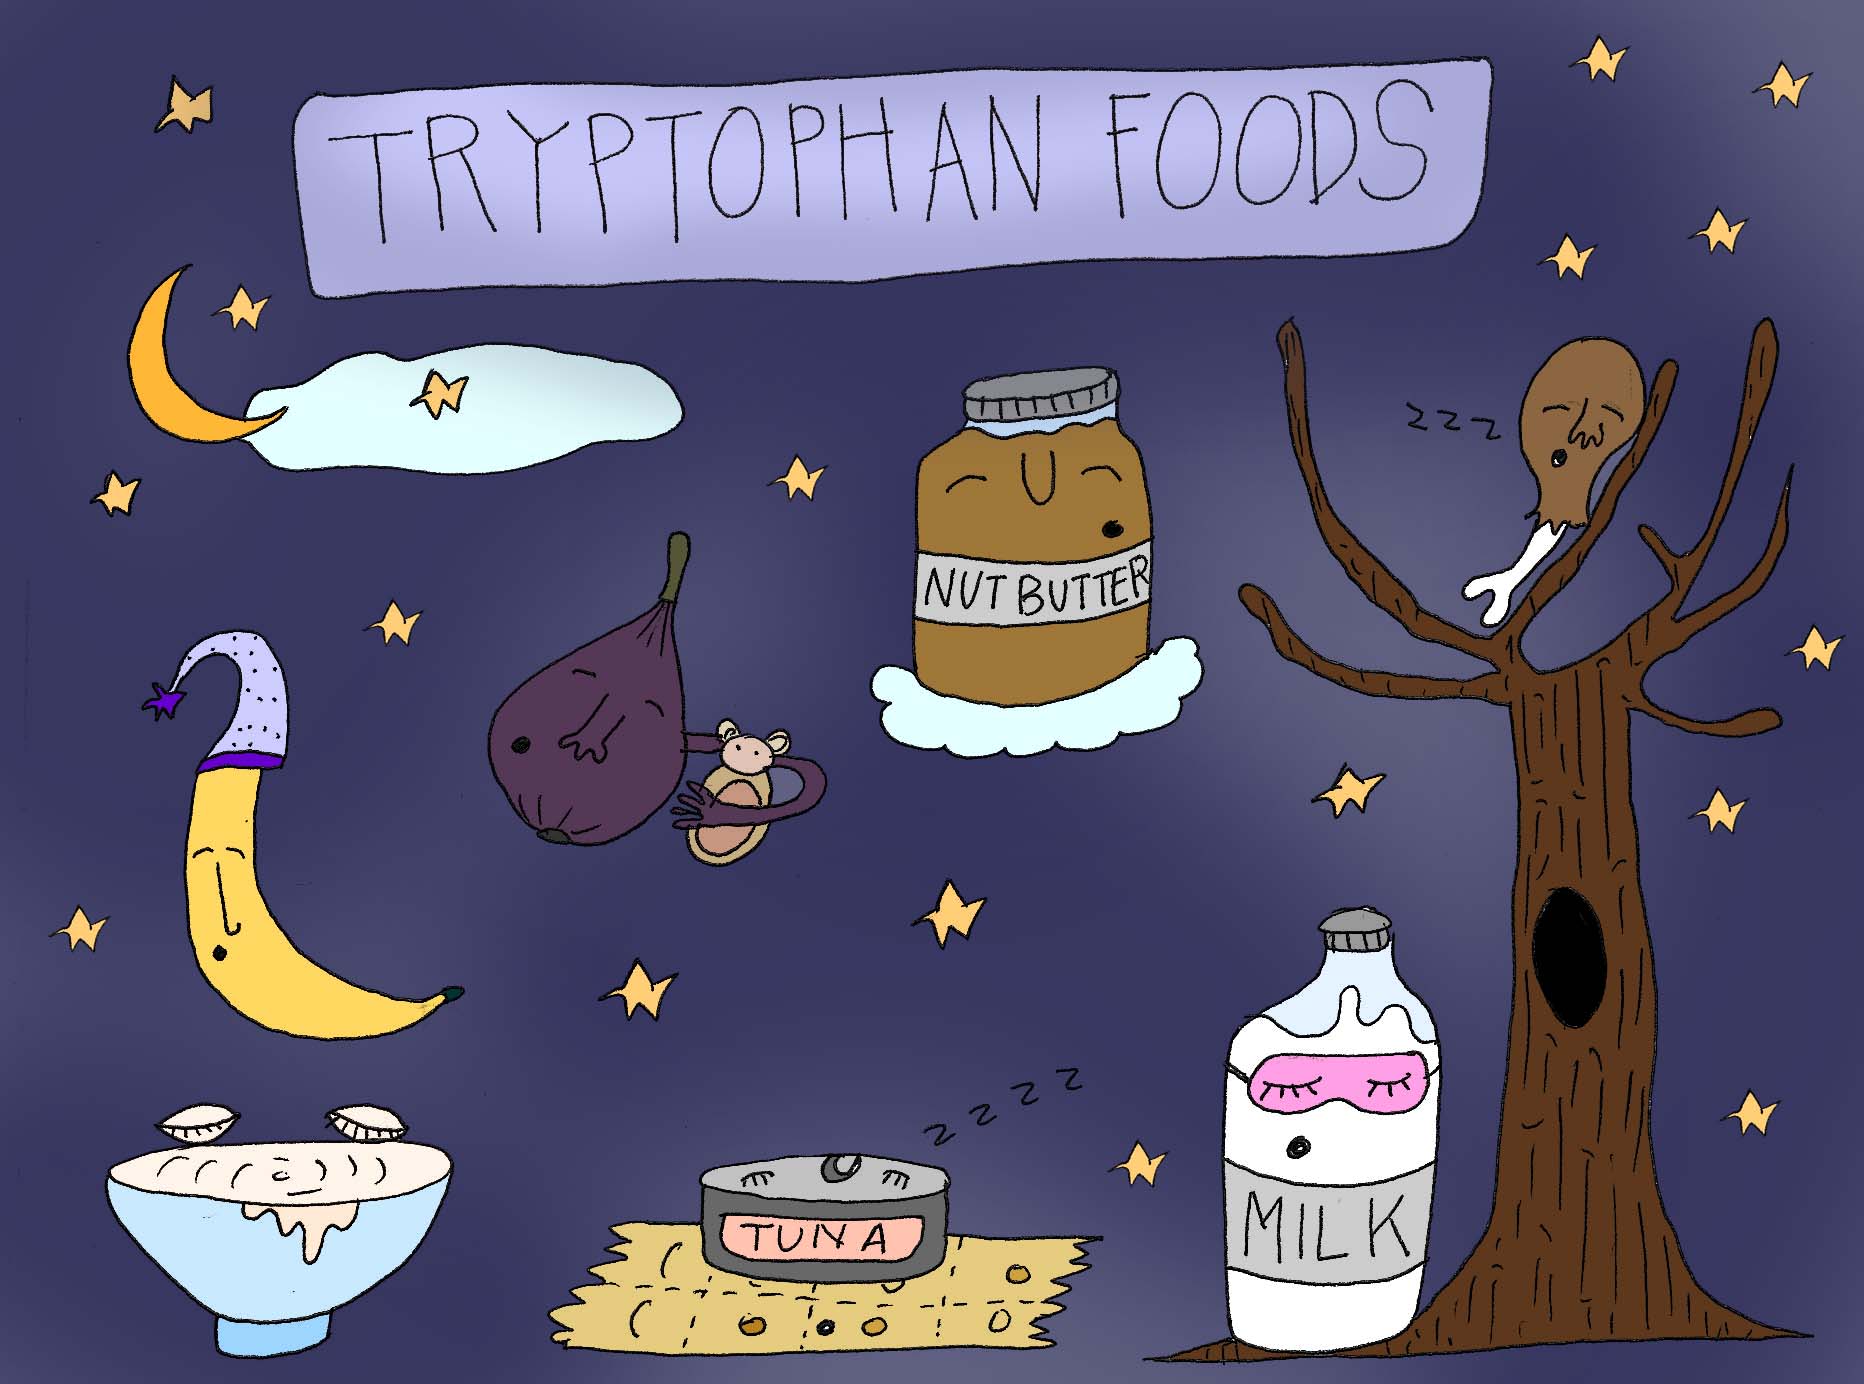 Tryptophan foods